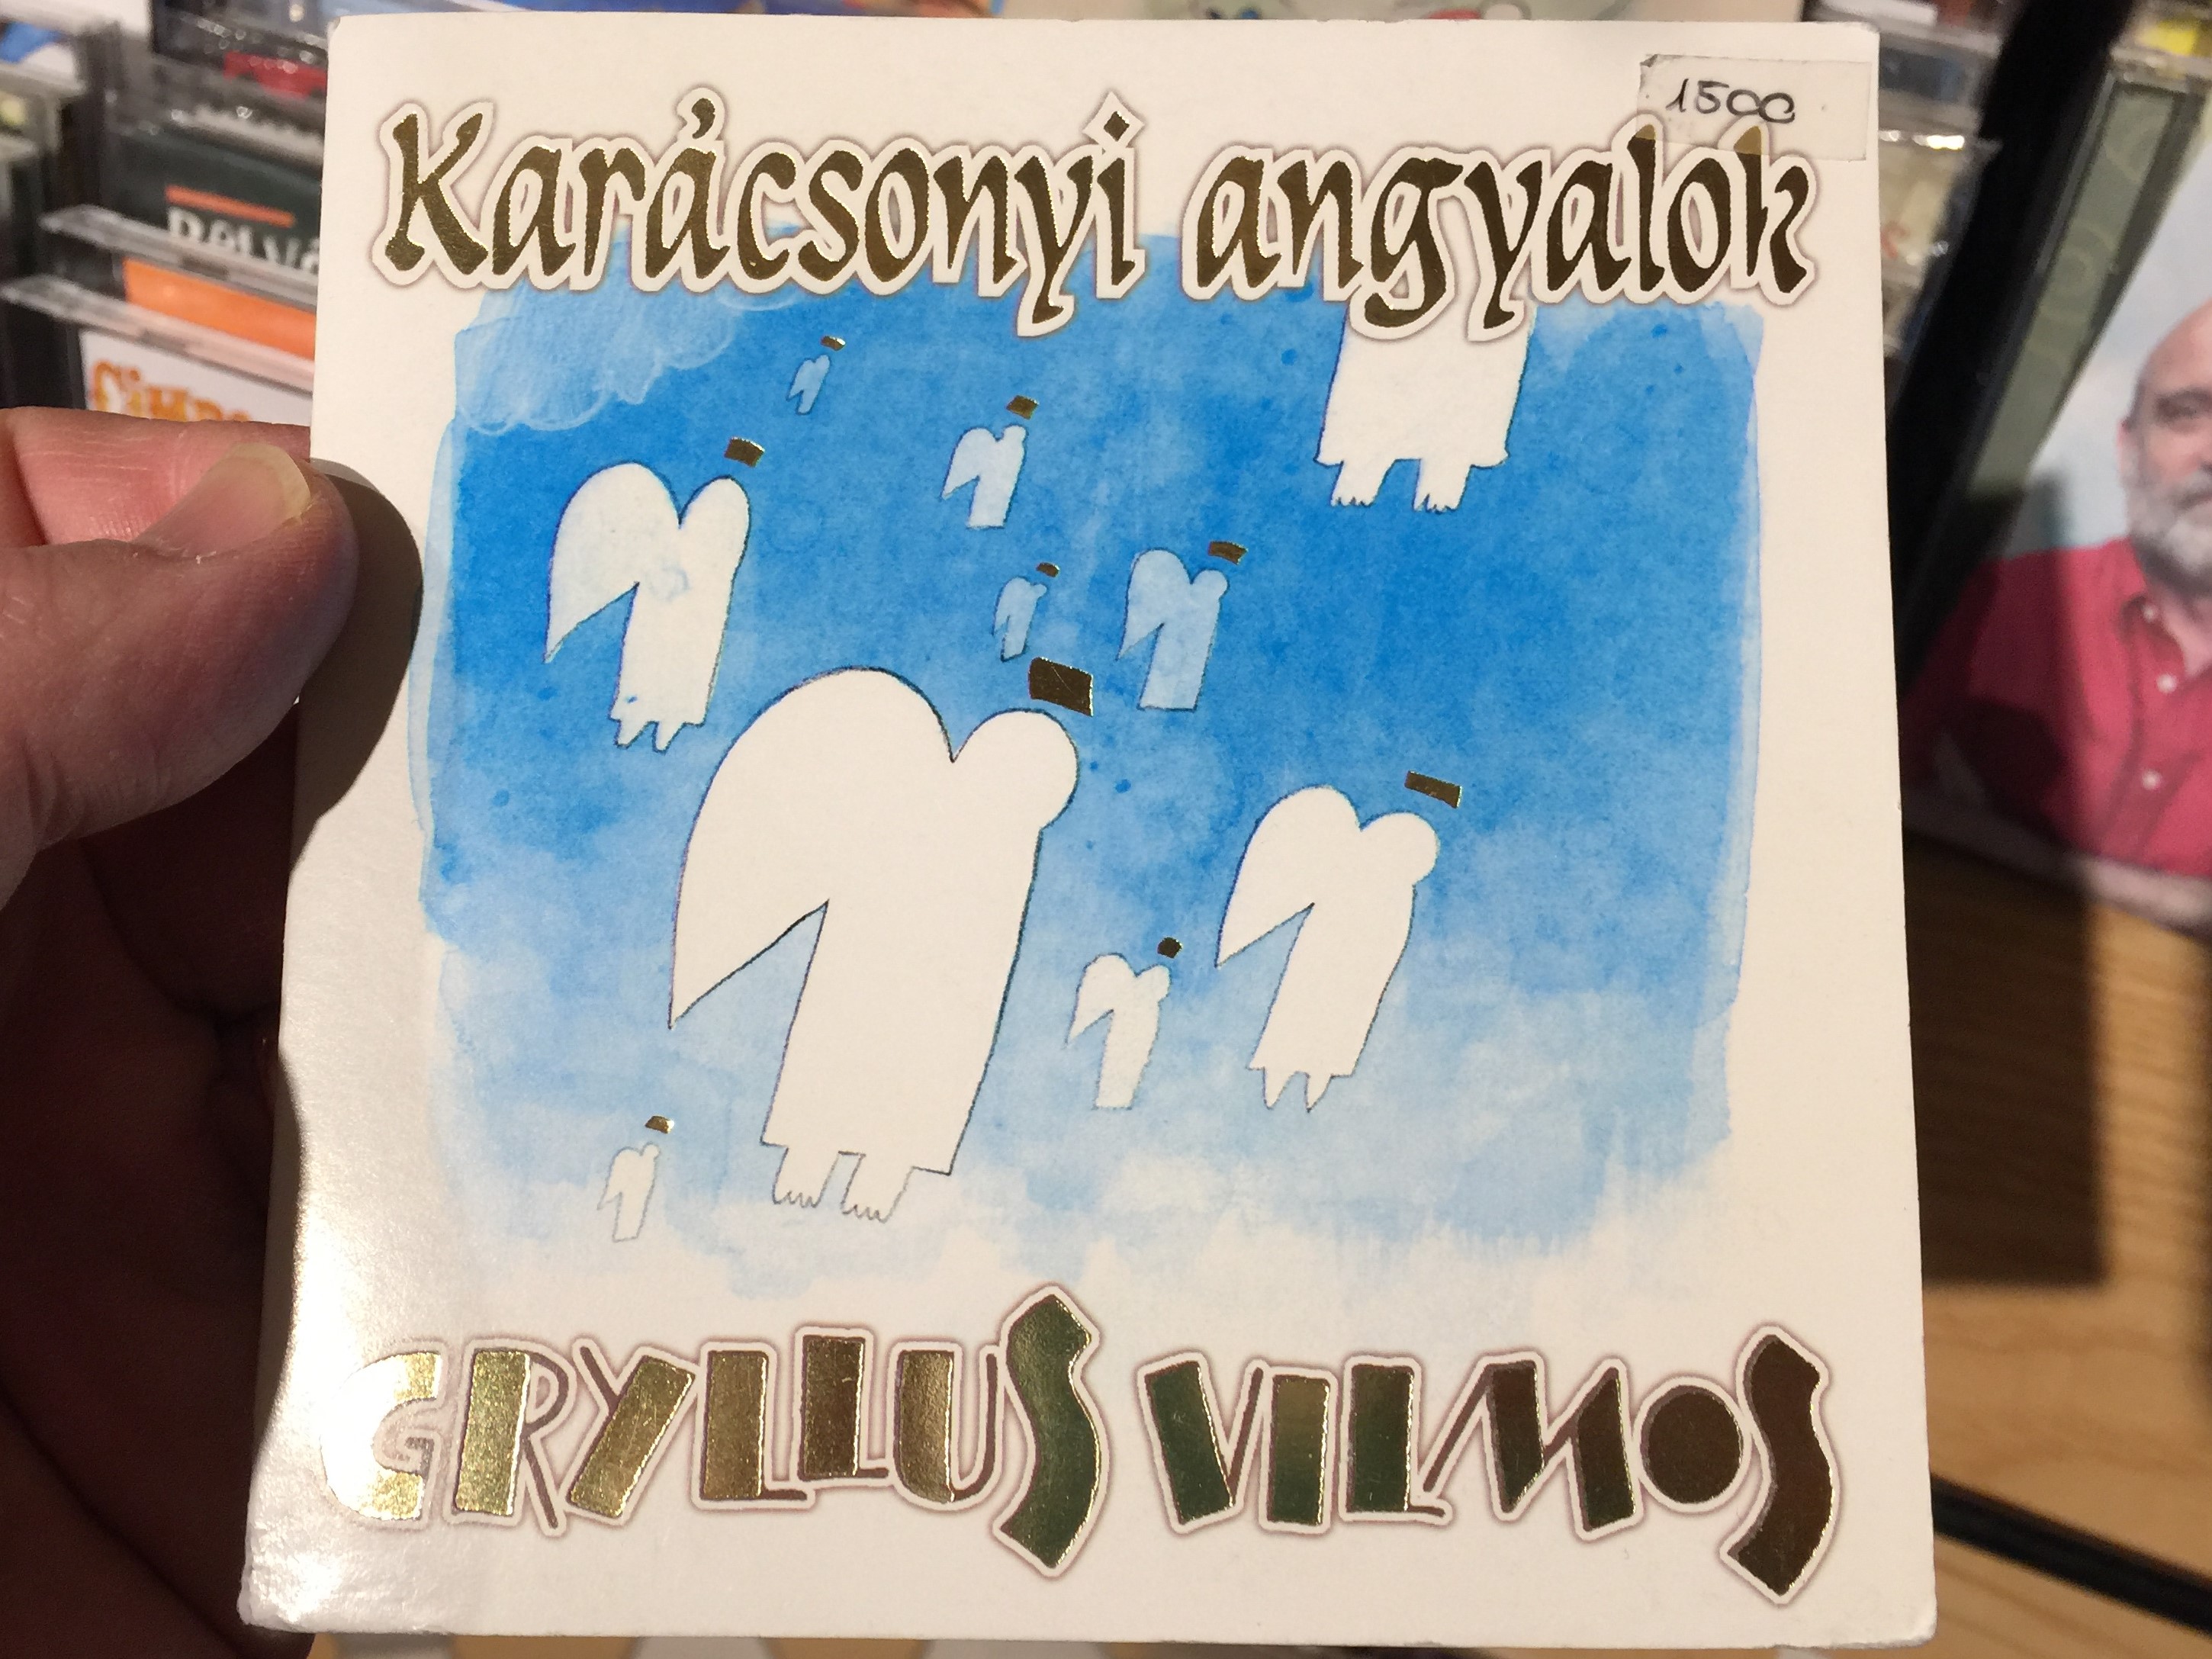 gryllus-vilmos-kar-csonyi-angyalok-treff-audio-cd-2005-trcd-008-1-.jpg